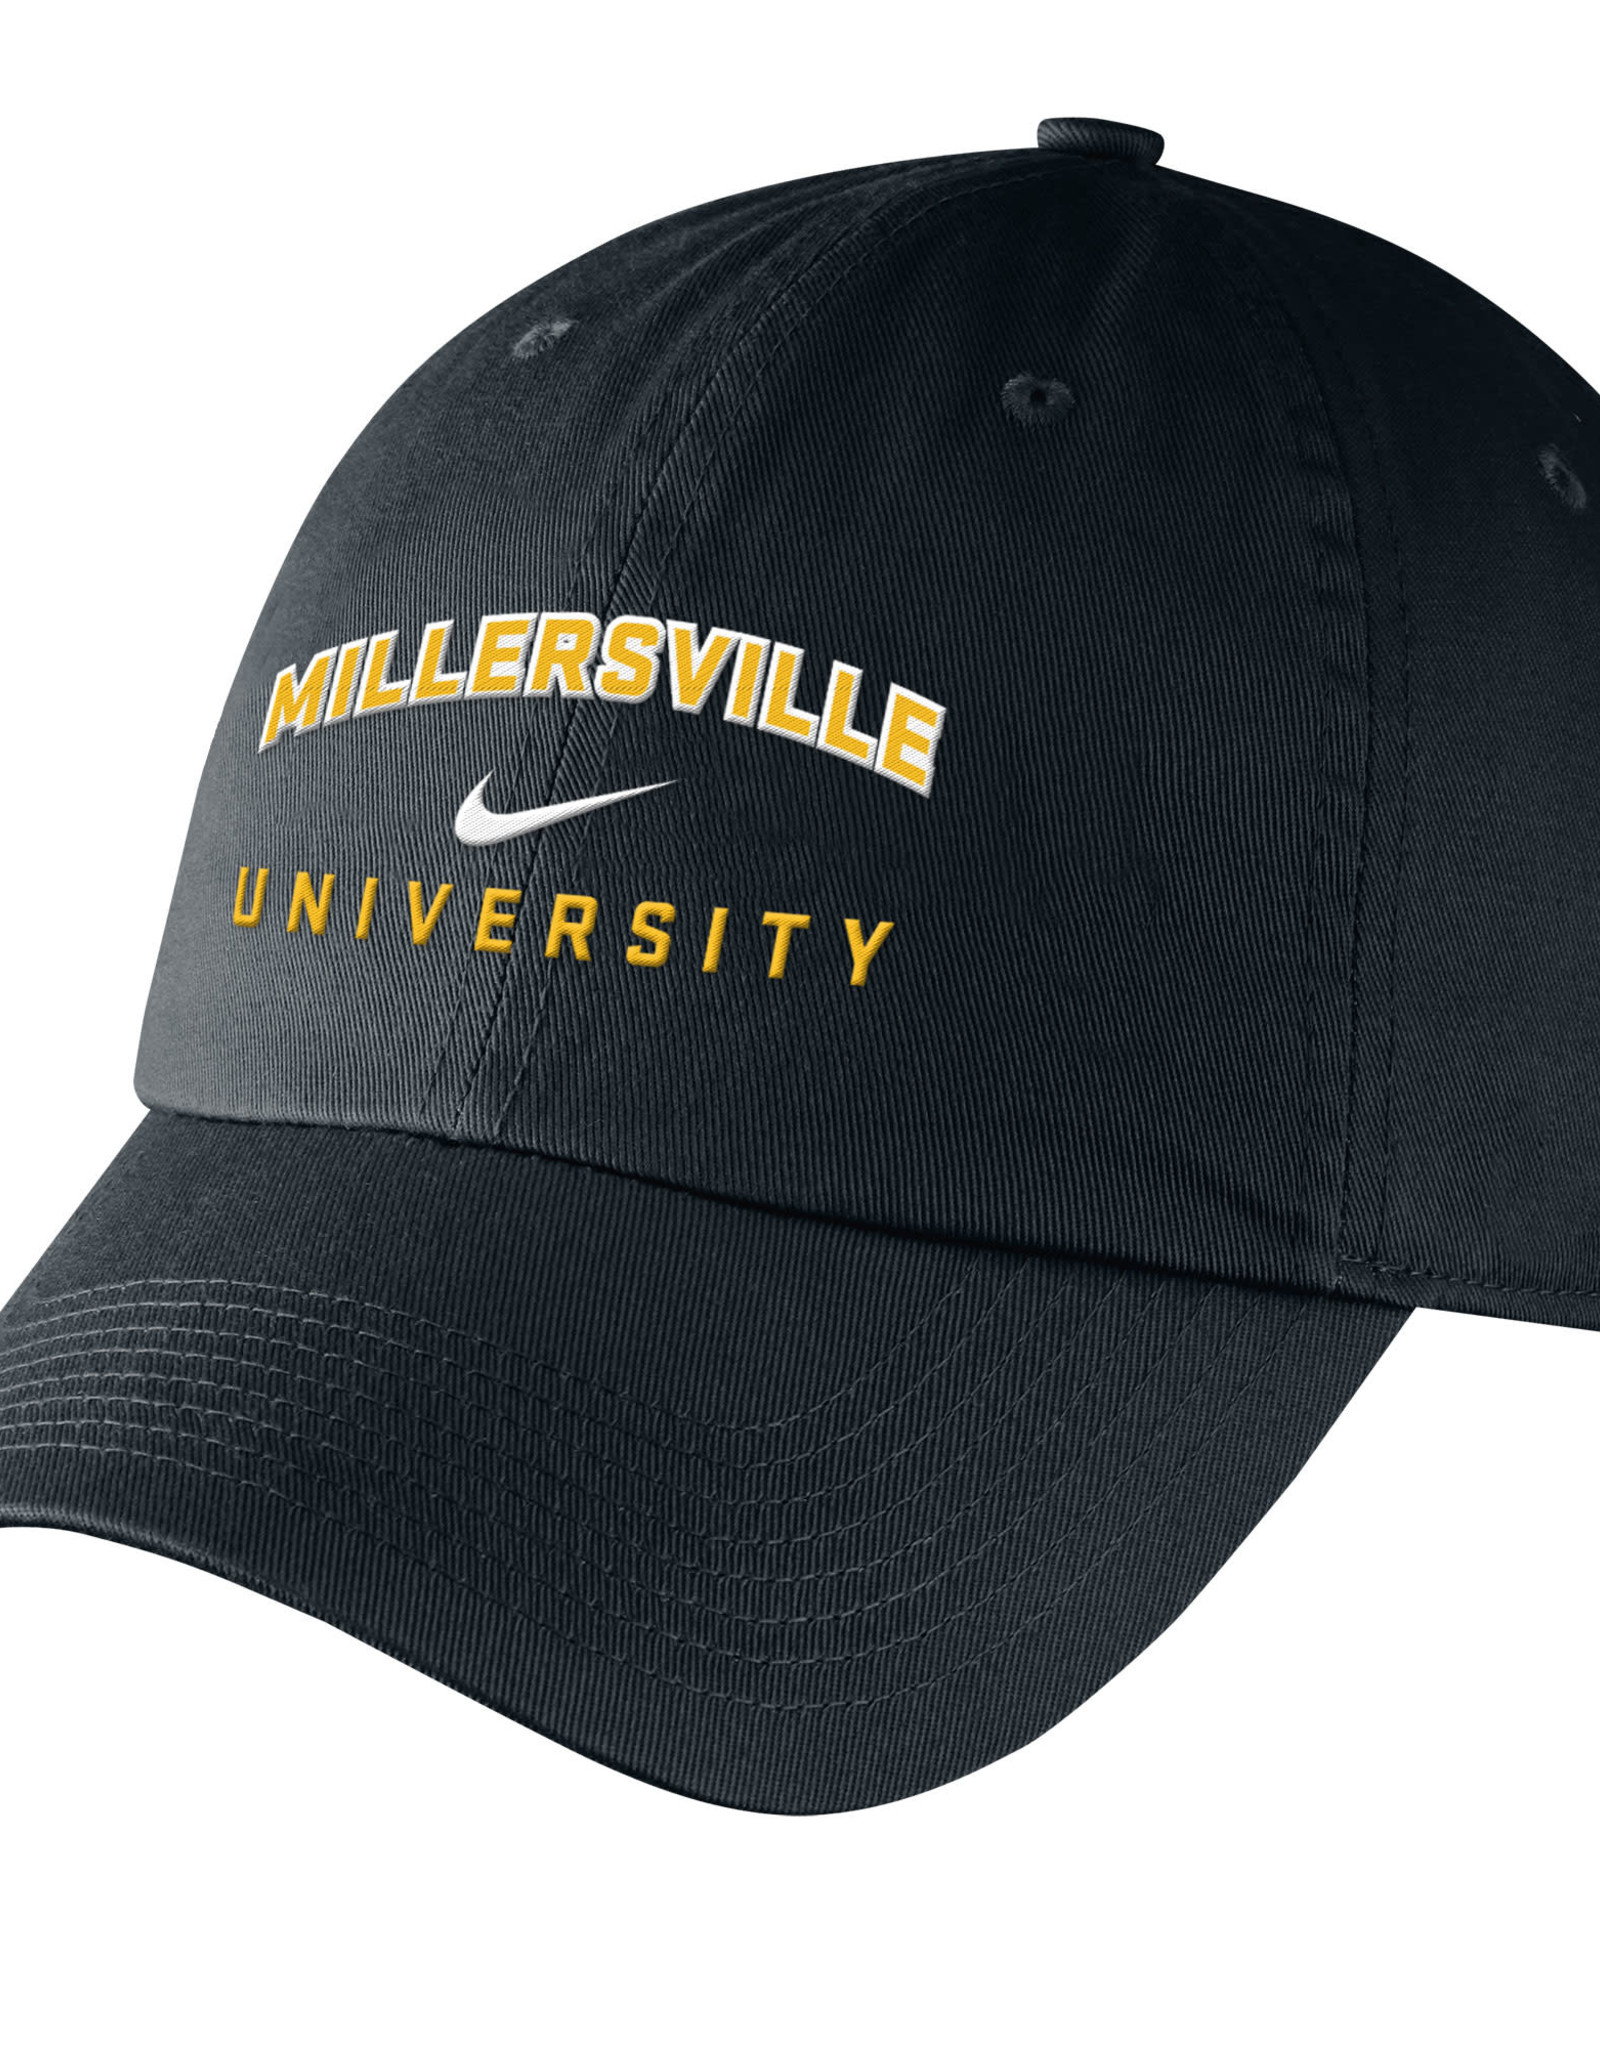 Nike Nike Black Millersville University Campus Cap